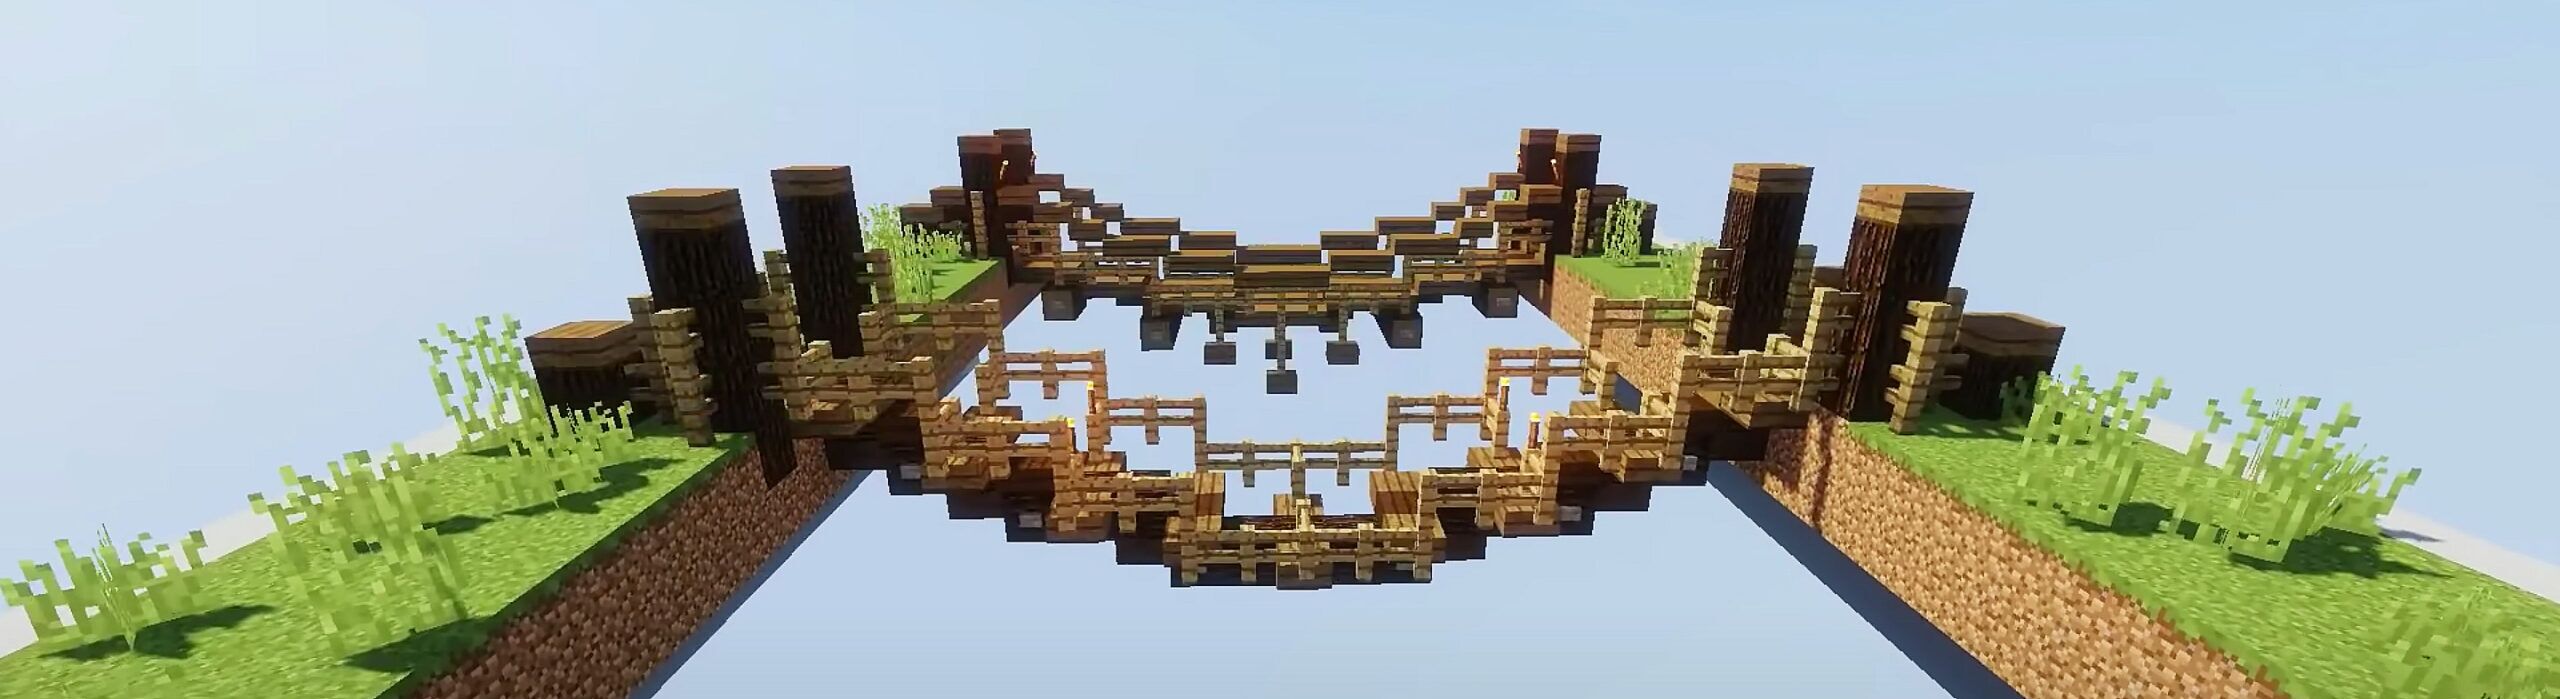 Minecraft Bridge: 8 Cool Ideas To Cross That Gap